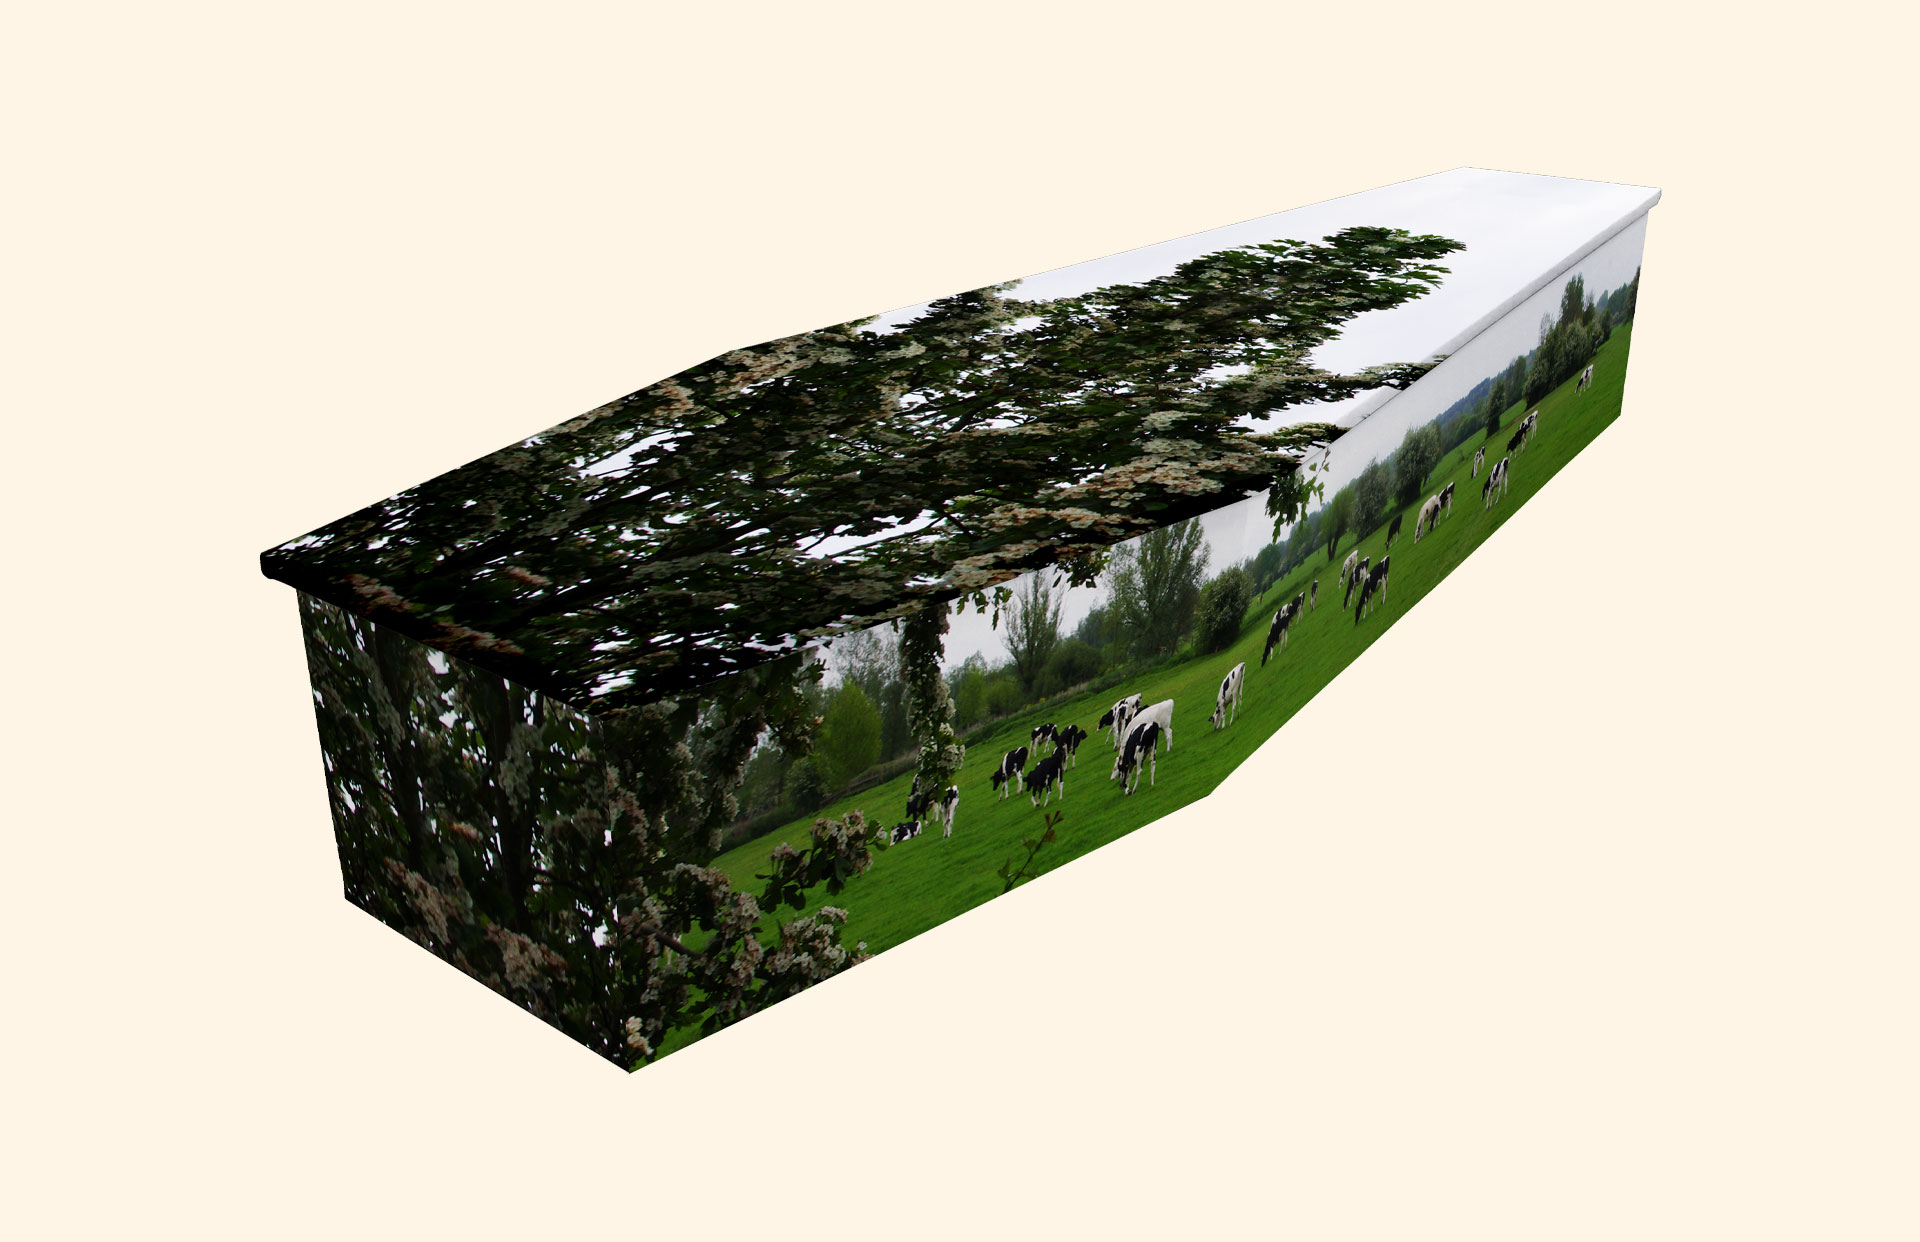 Pastures Green design on a cardboard coffin